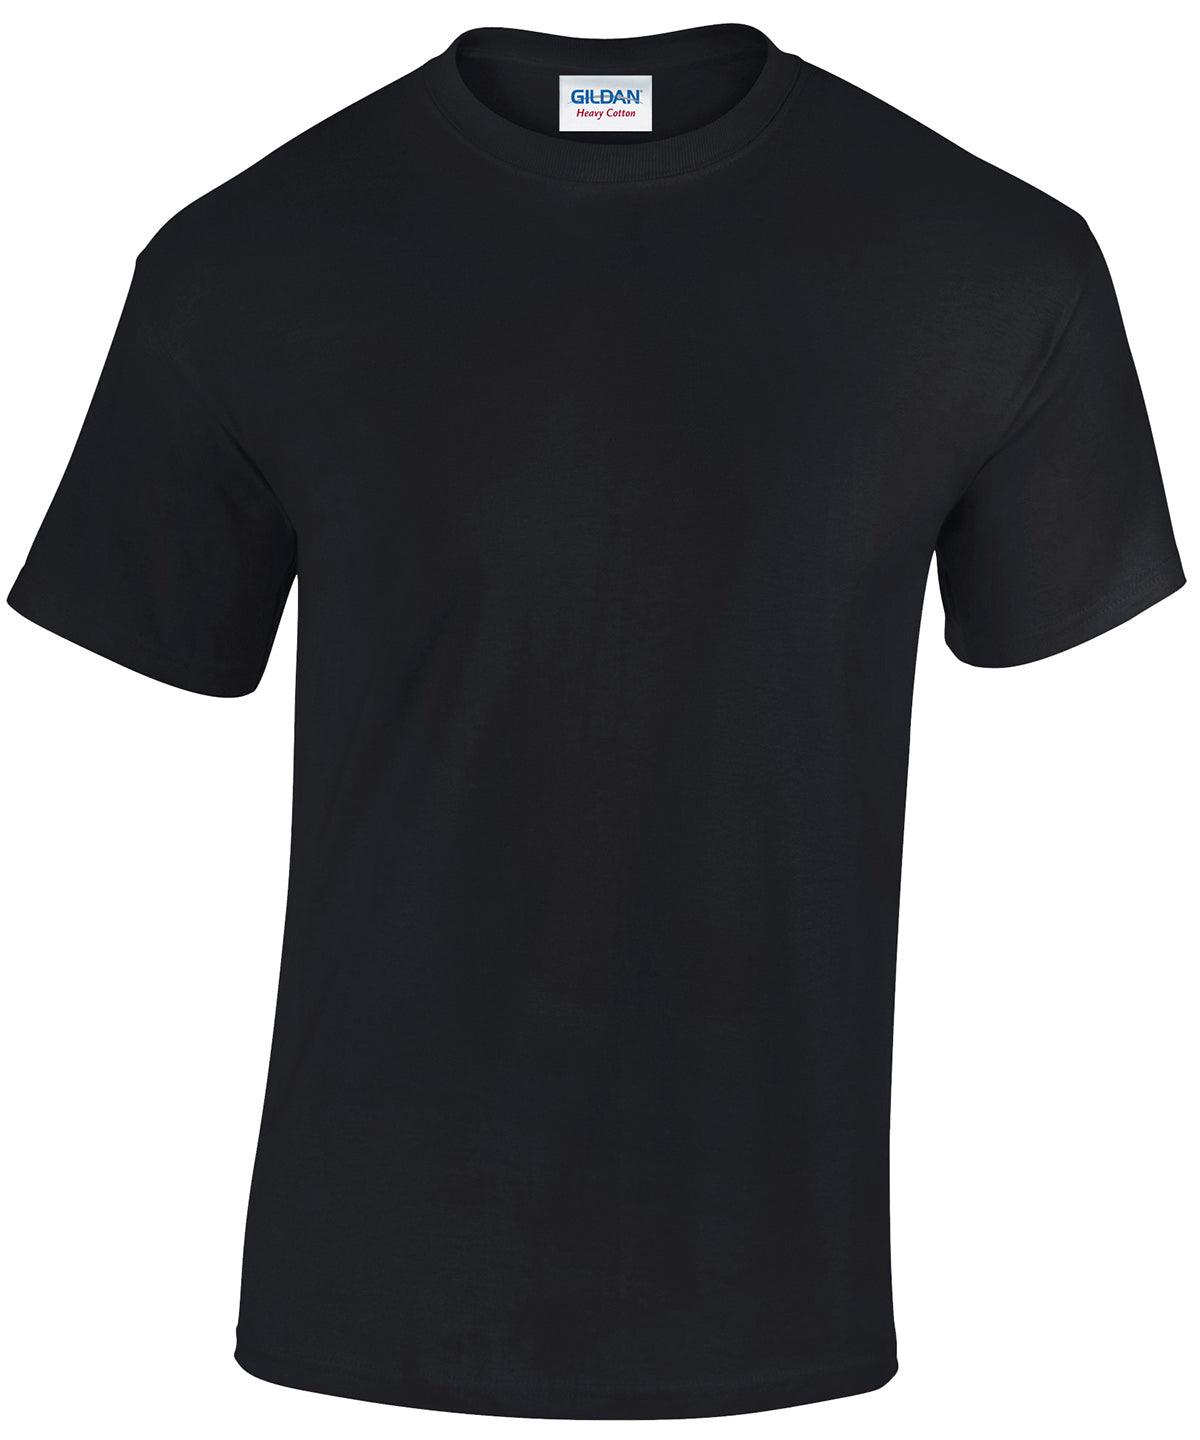 Personalised T-Shirts - Mid Green Gildan Heavy Cotton™ adult t-shirt